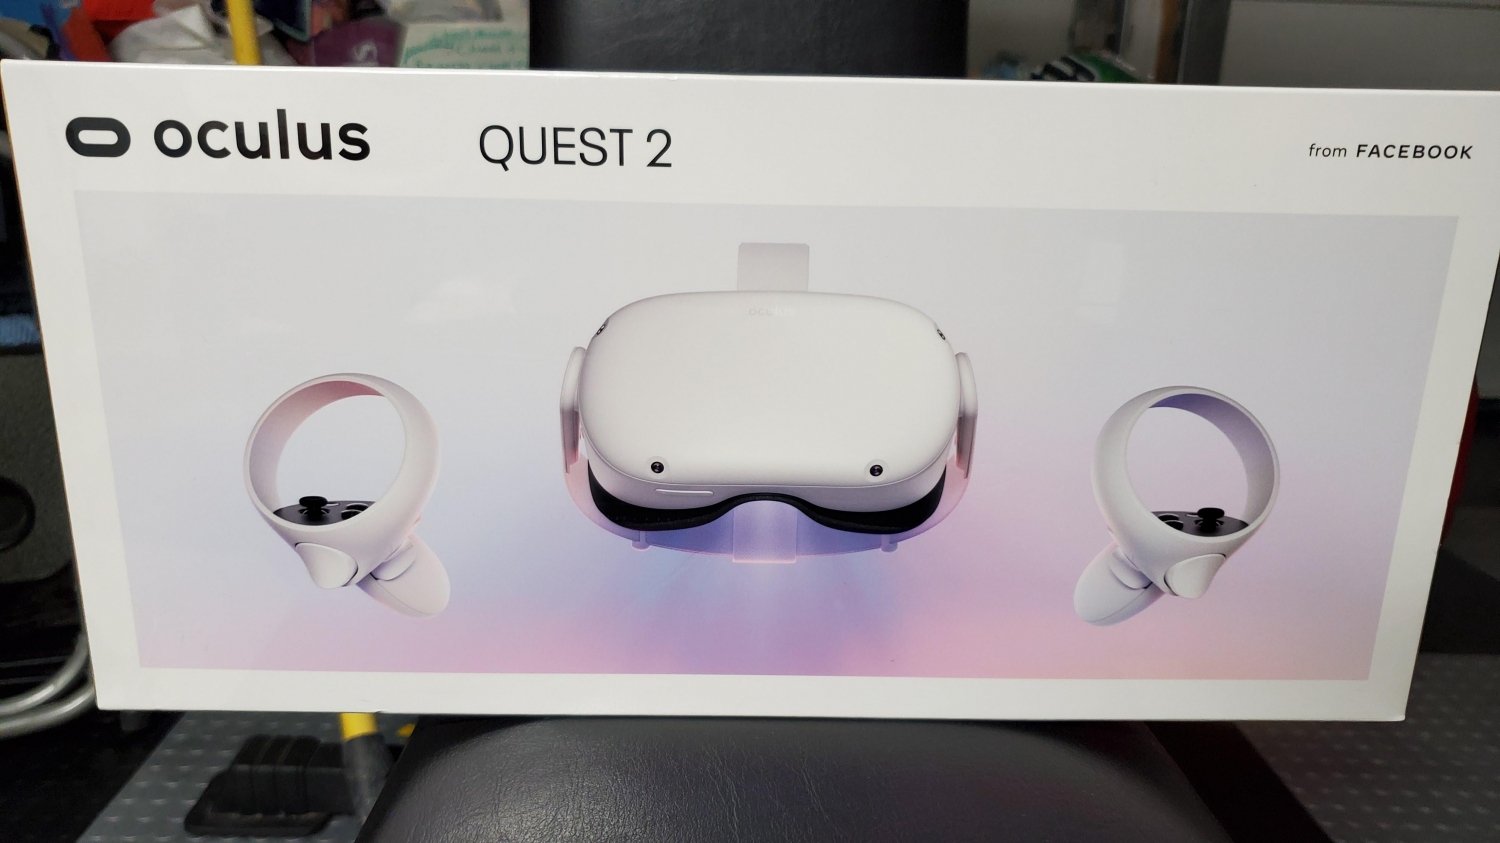 oculus quest box vr